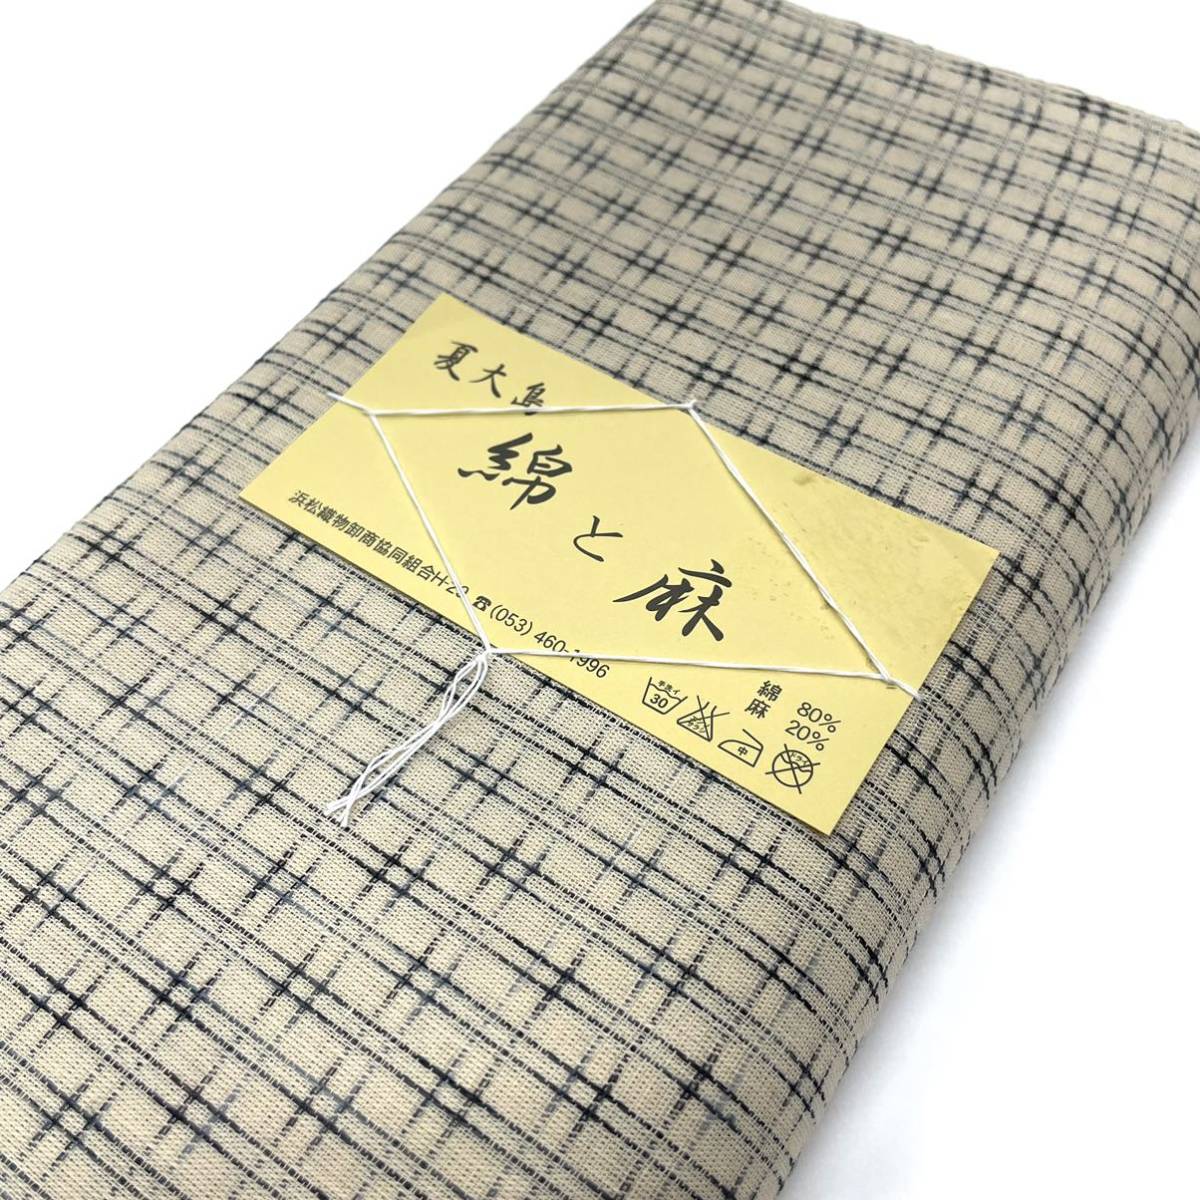  summer Ooshima man yukata made in Japan for man man for for adult man yukata man yukata cloth yukata cloth cotton flax yukata cotton flax flax yukata beige 